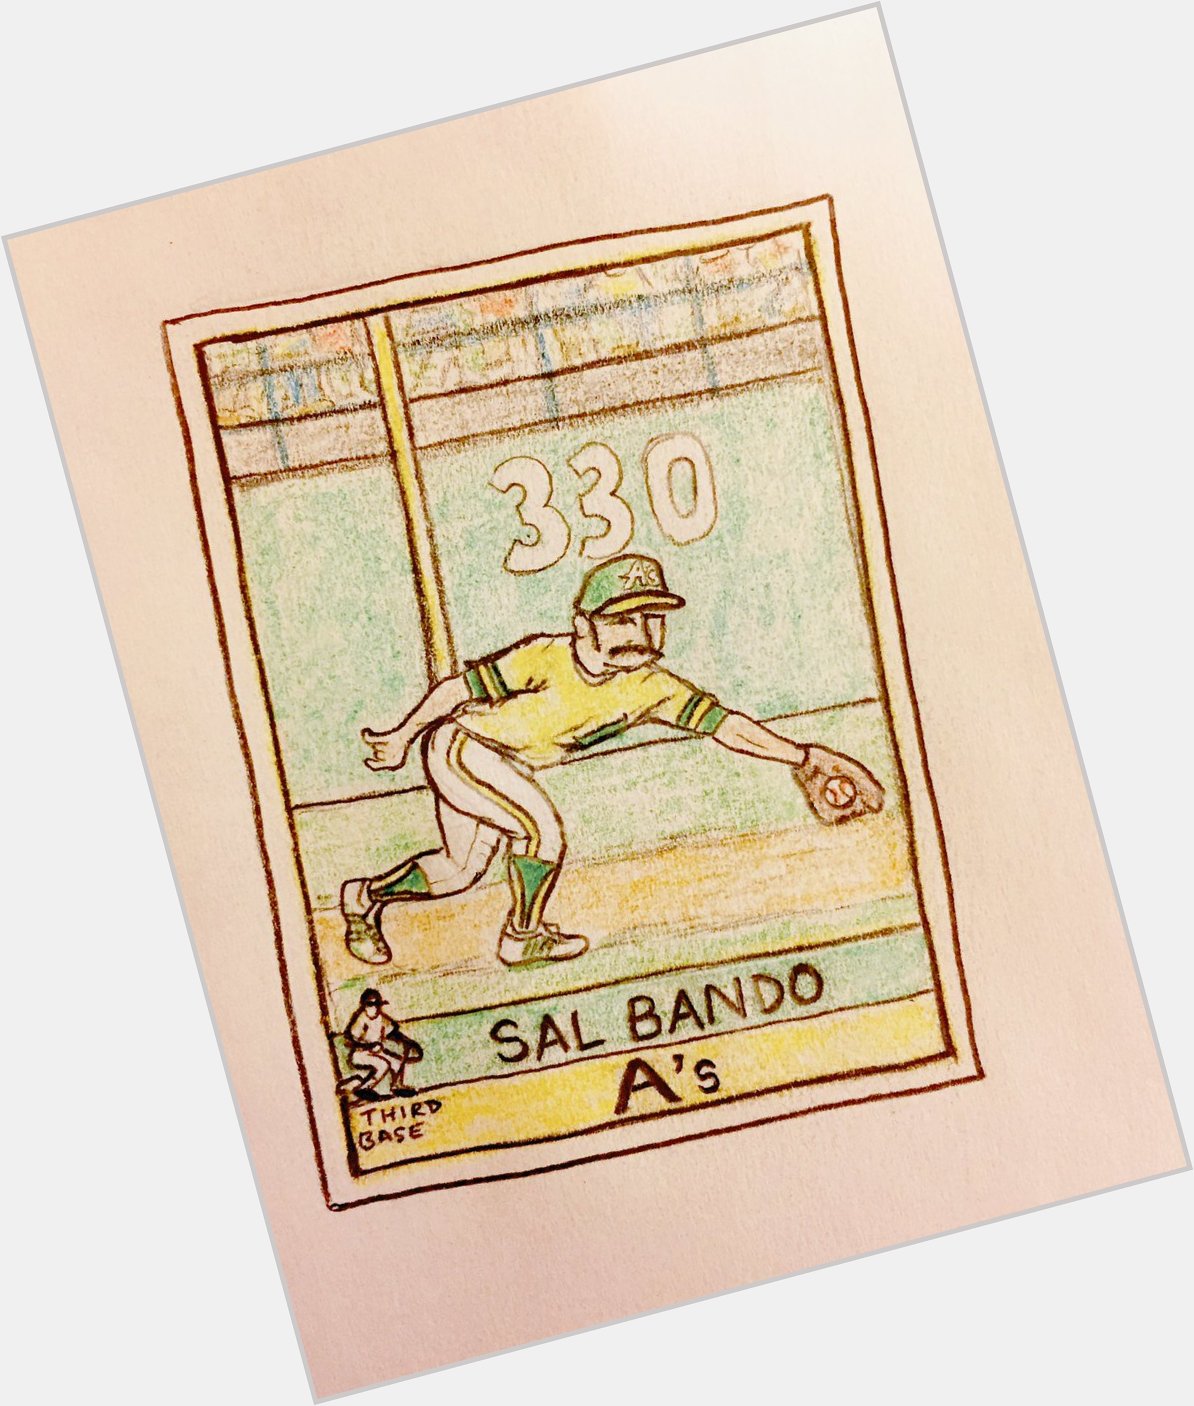 Happy 73rd birthday to Sal Bando!  